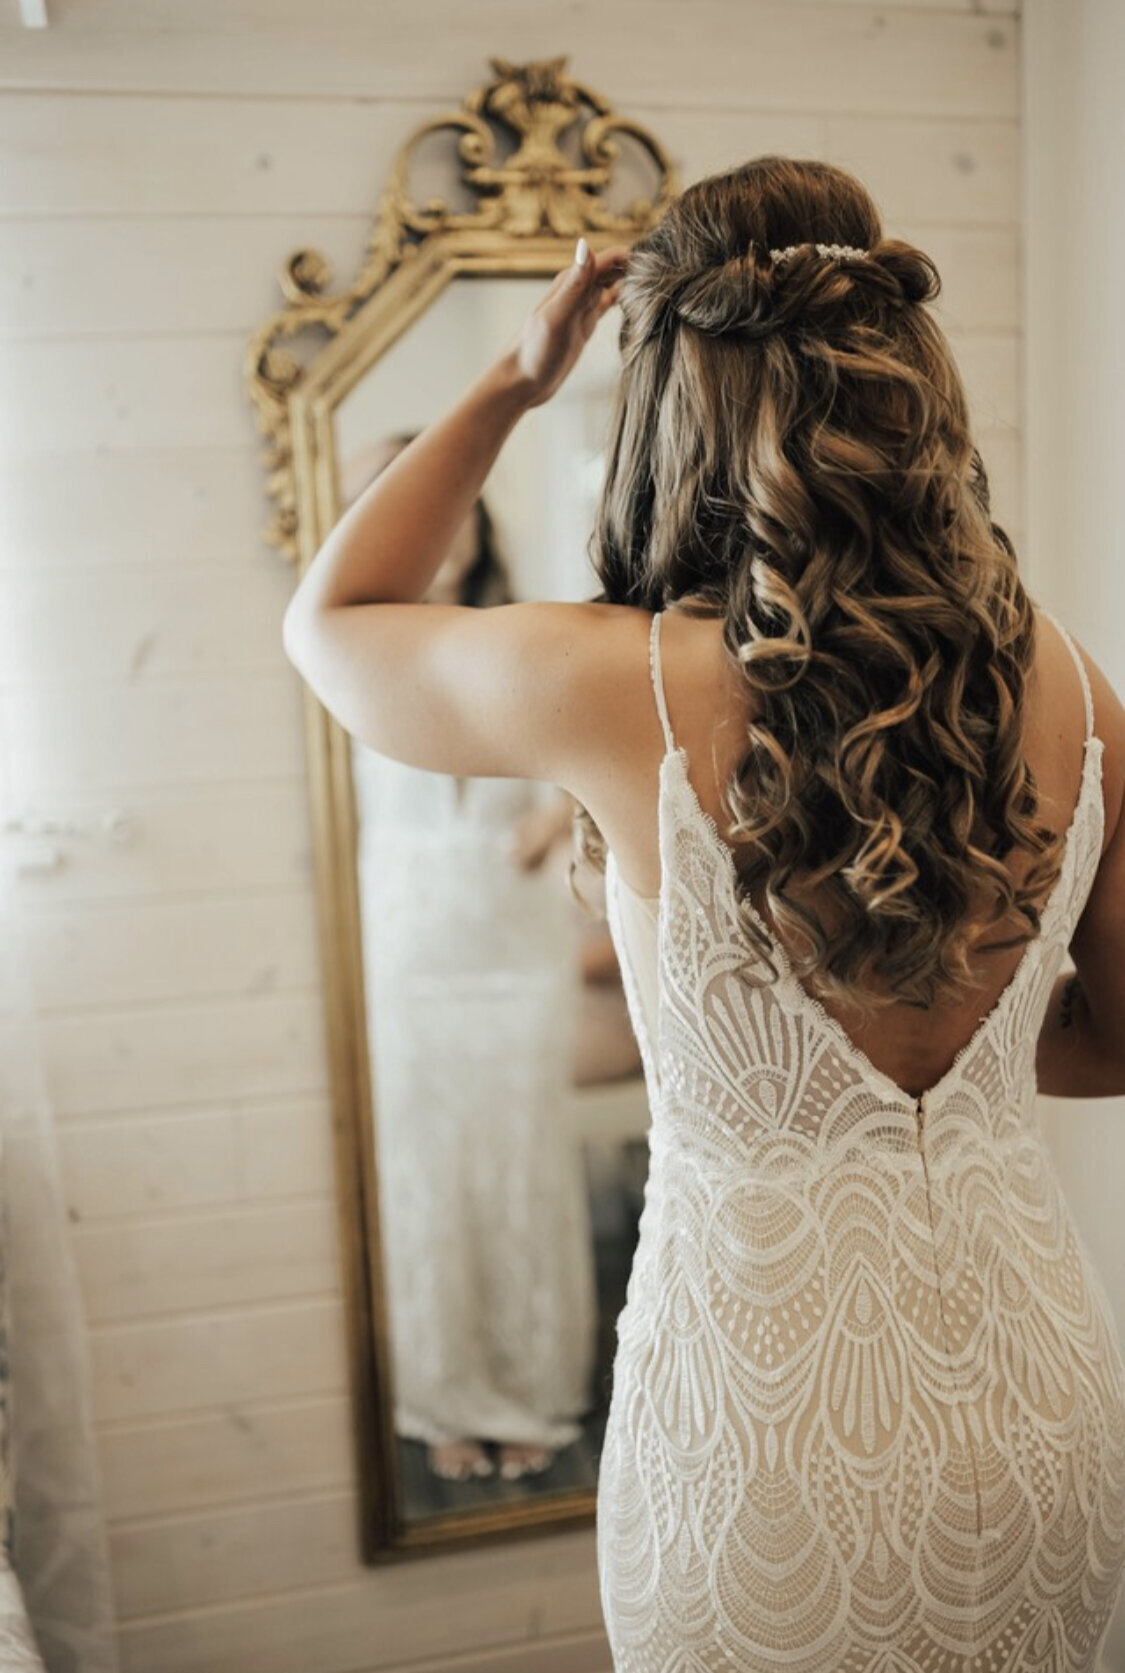 Snohomish Bridal Hair & Makeup